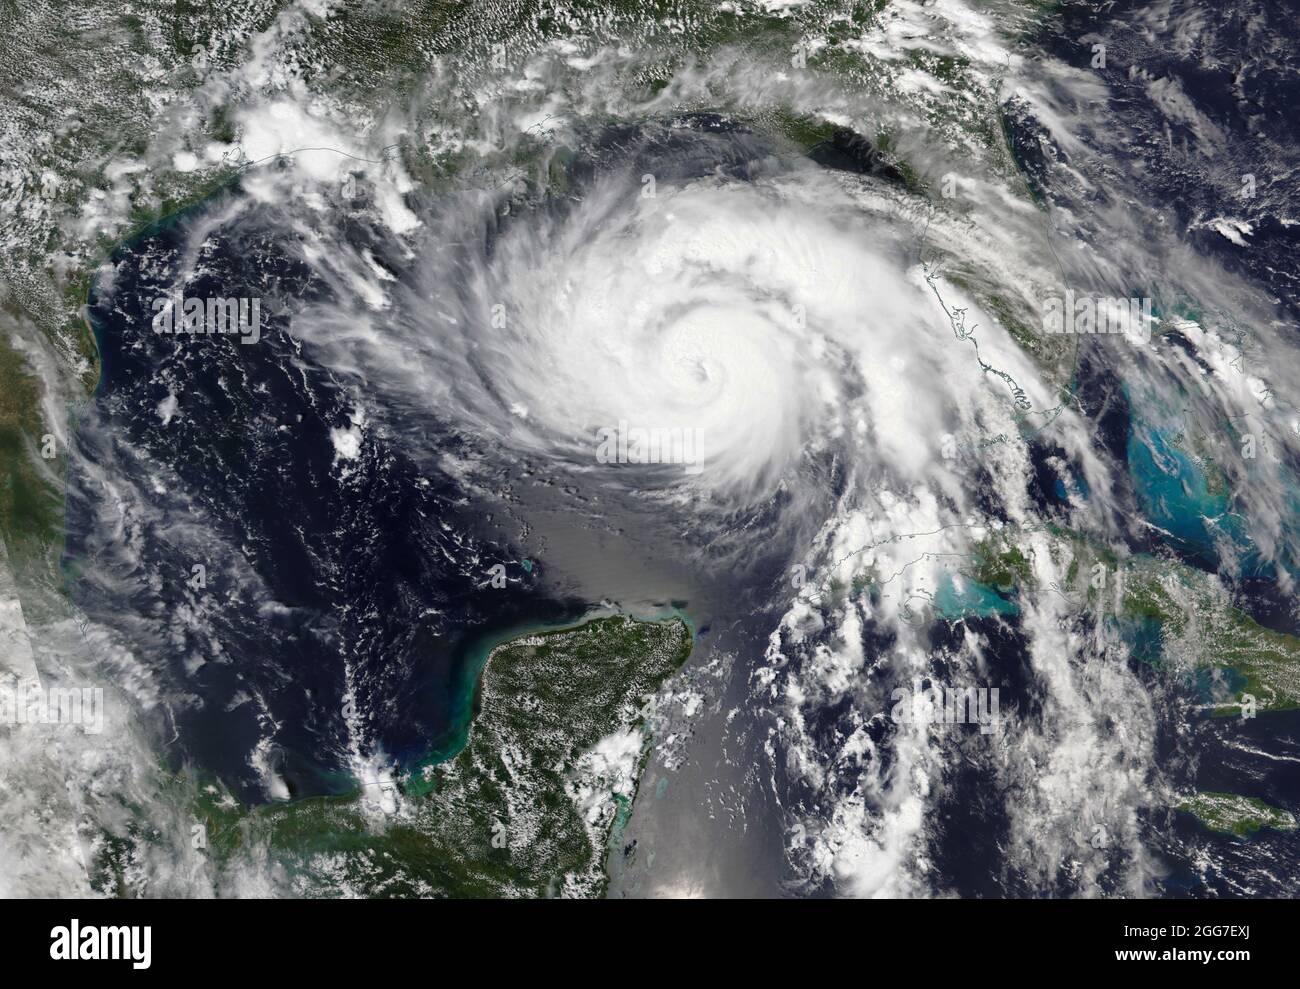 GOLFE DU MEXIQUE - 28 août 2021 - l'ouragan Ida vu de l'espace par les satellites MODIS de la NASA le 28 août 2021. L'ouragan Ida a frappé Louisi Banque D'Images